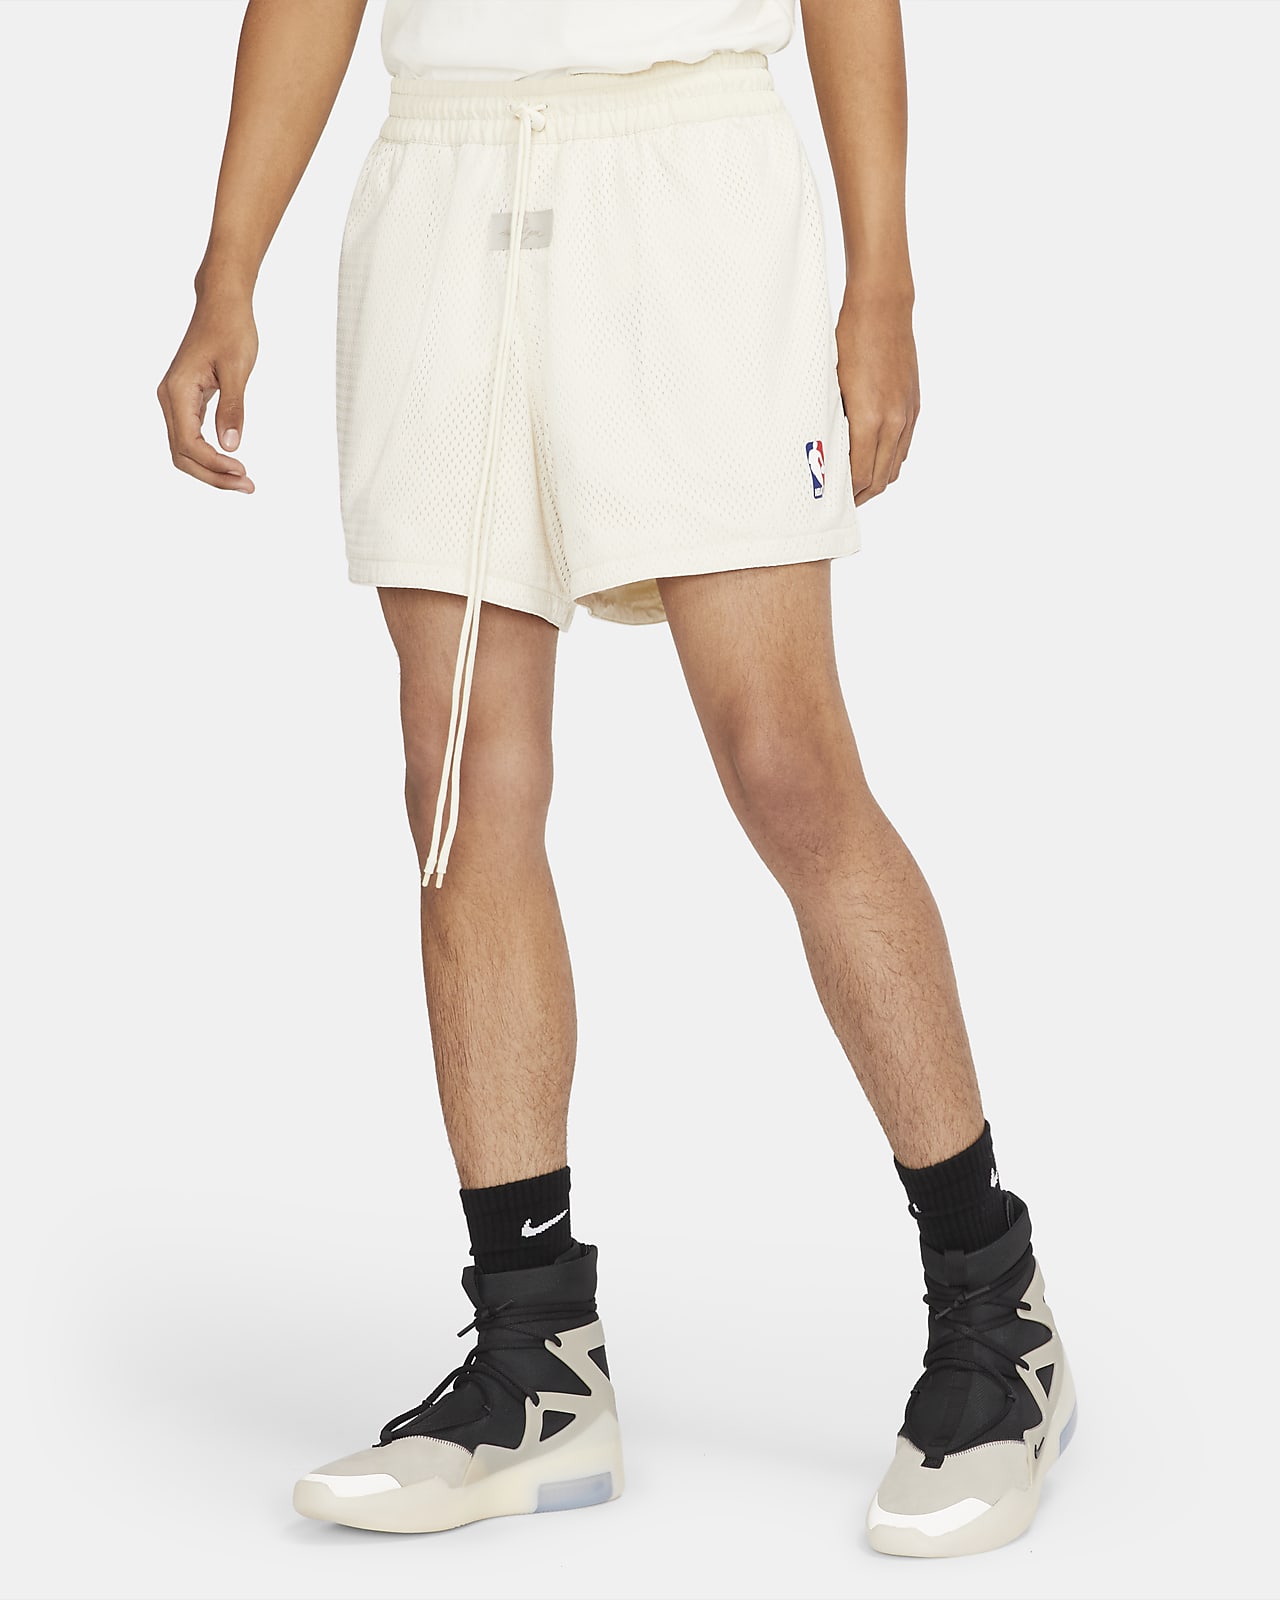 Nike x Fear of God Basketball Shorts 